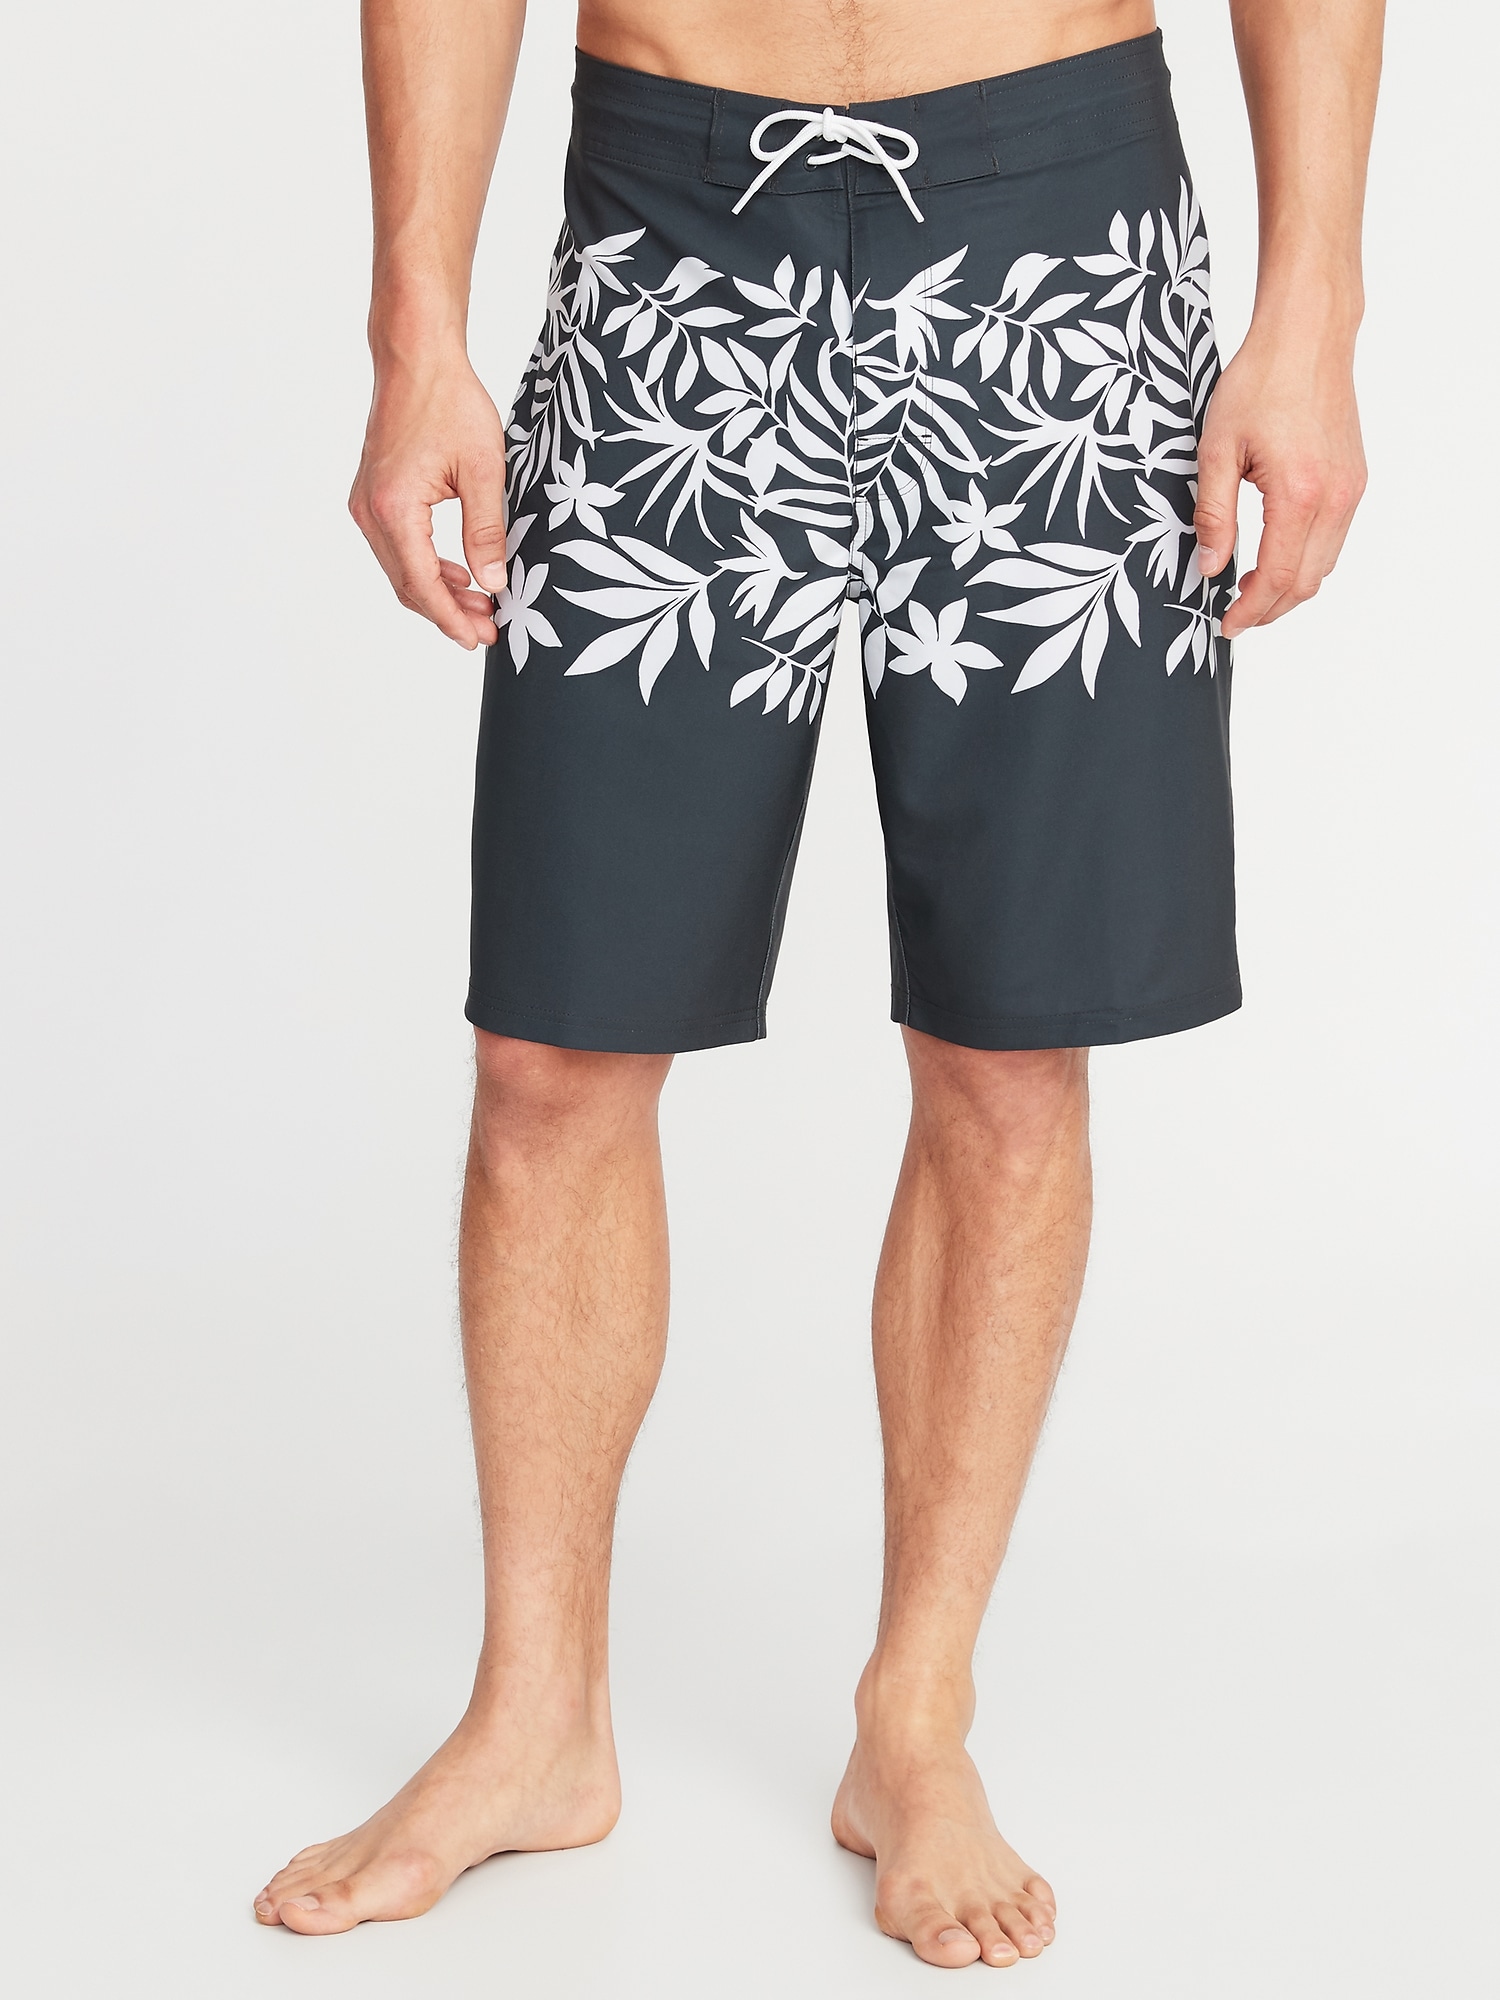 Built-In Flex Board Shorts for Men - 10-inch inseam | Old Navy